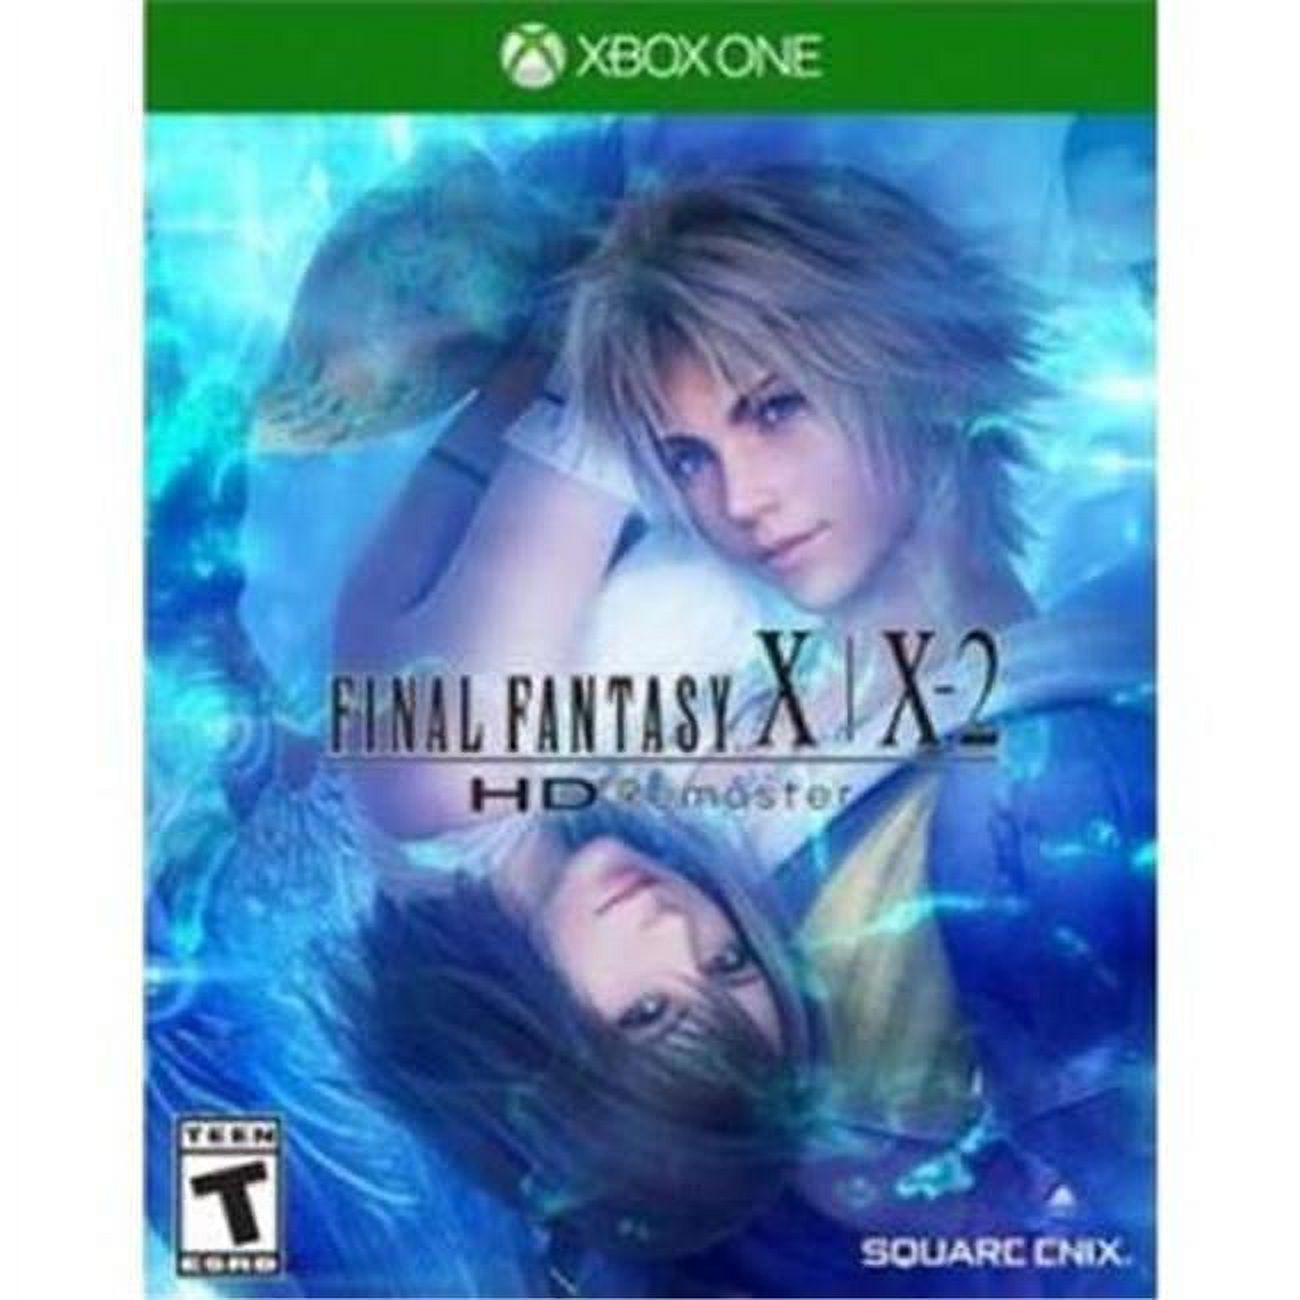 Final Fantasy X + X2 HD, Square Enix, Xbox One, 662248922065 - image 1 of 2